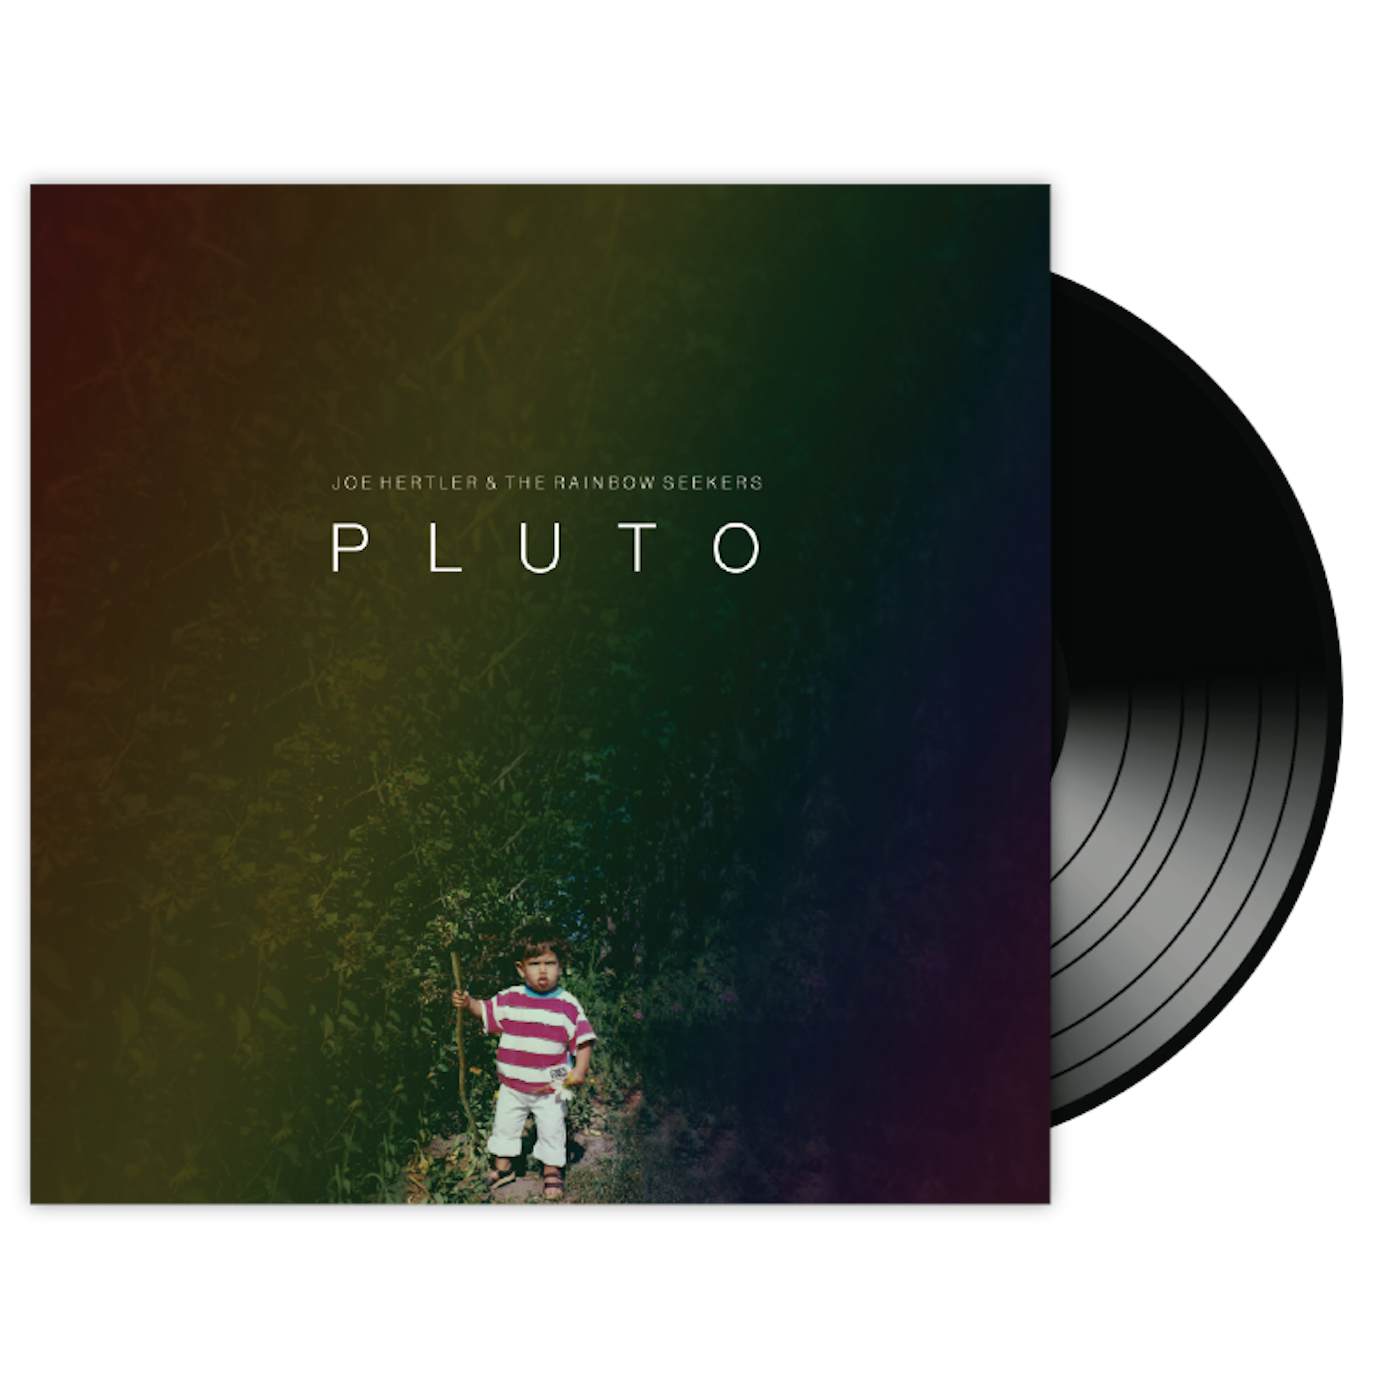 Joe Hertler & The Rainbow Seekers Pluto (Vinyl Record)